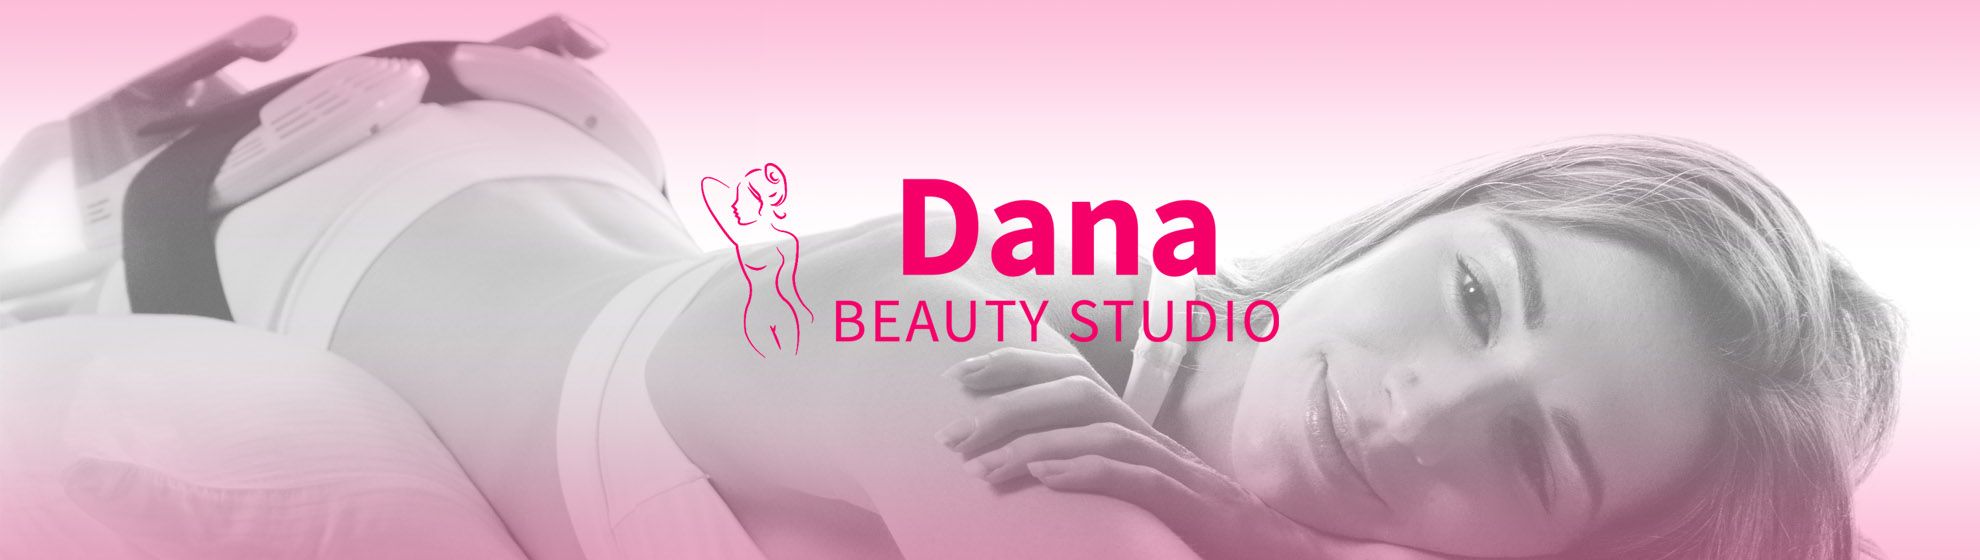 Beauty Studio Dana